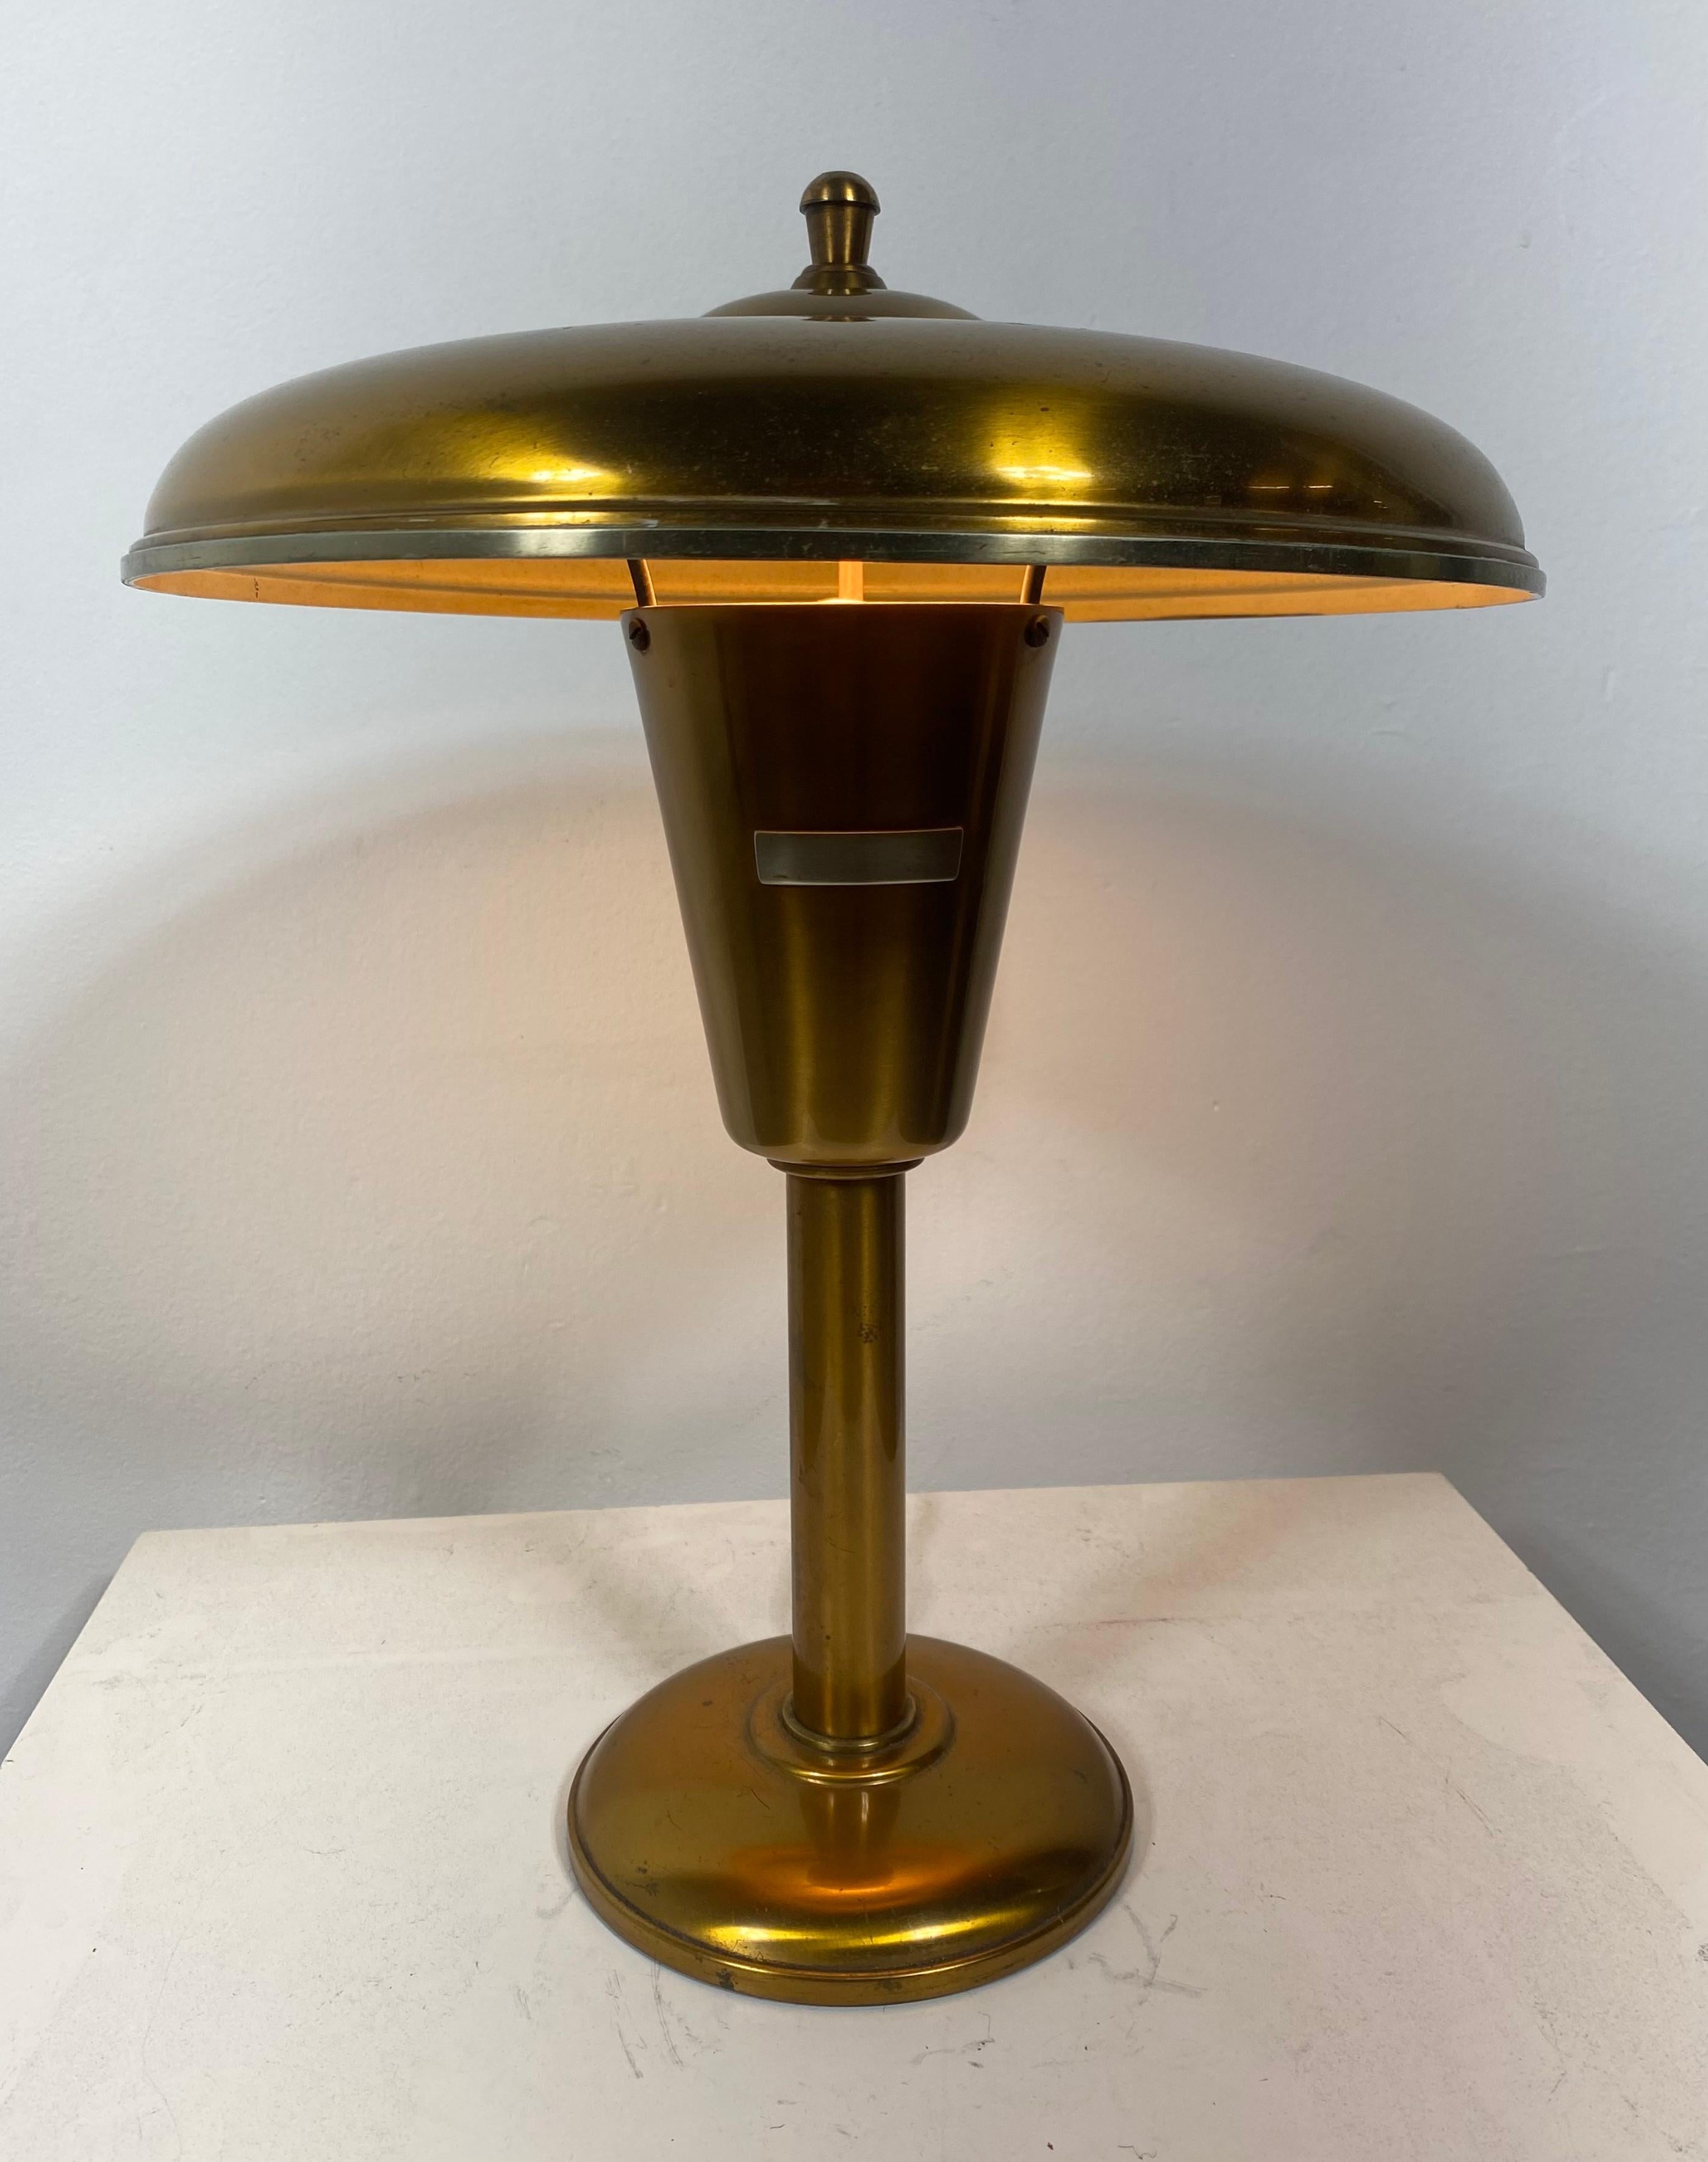 Classic American Art Deco, Faries desk / task lamp circa 1930s, Sleek, simple elegant design, Normandy Bronze Finish. minor blemish to top of shade.